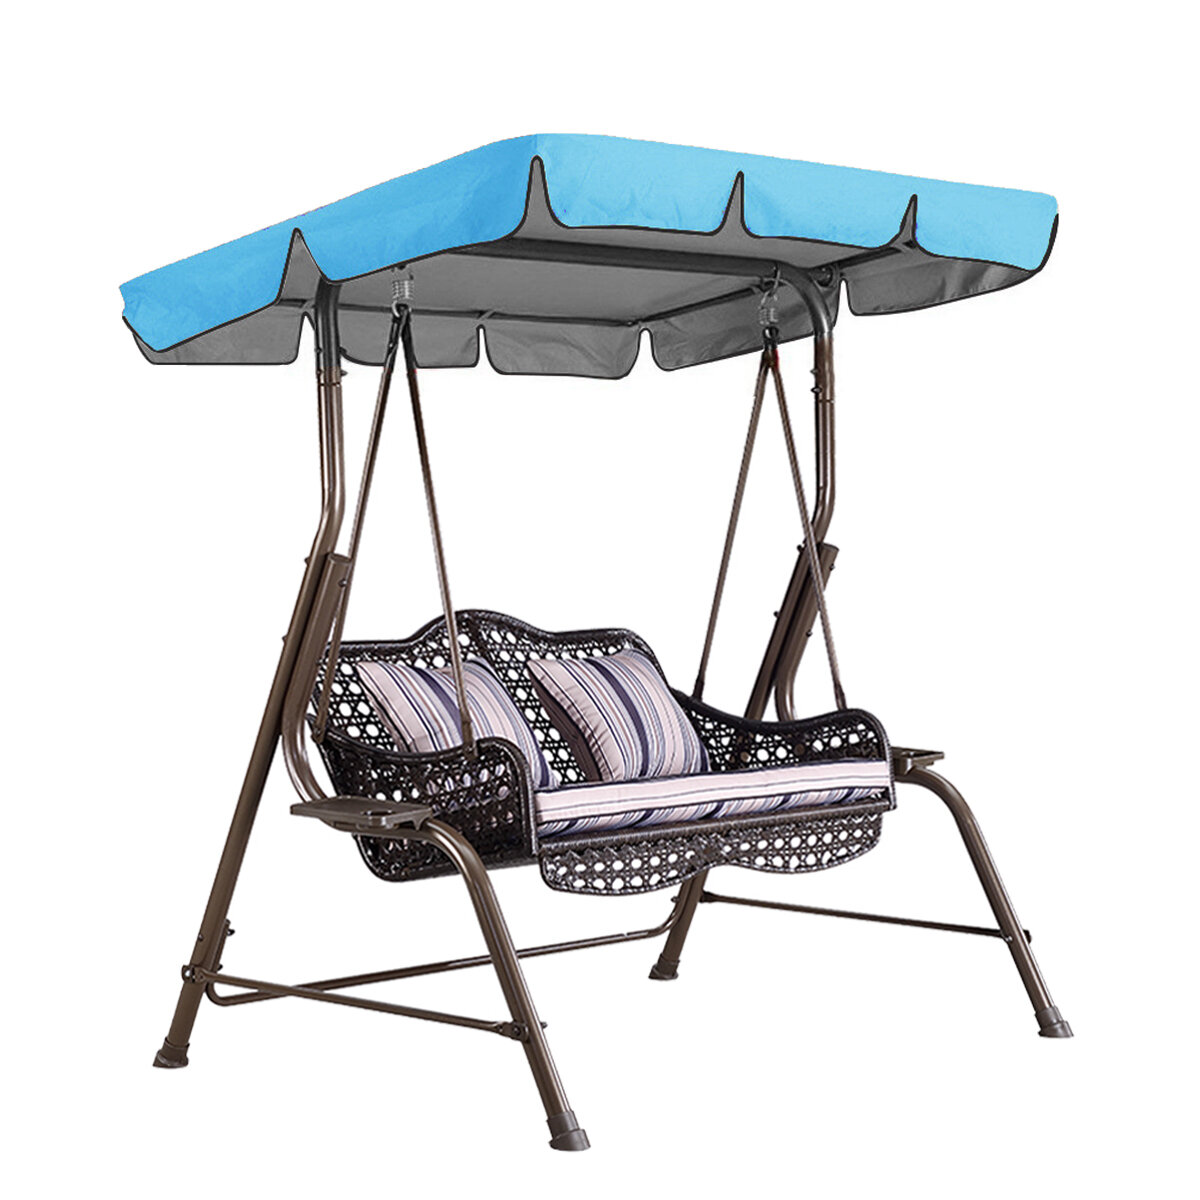 Waterproof Sunshade Swing Chair Hammock Canopy Garden Top Cover for Outdoor